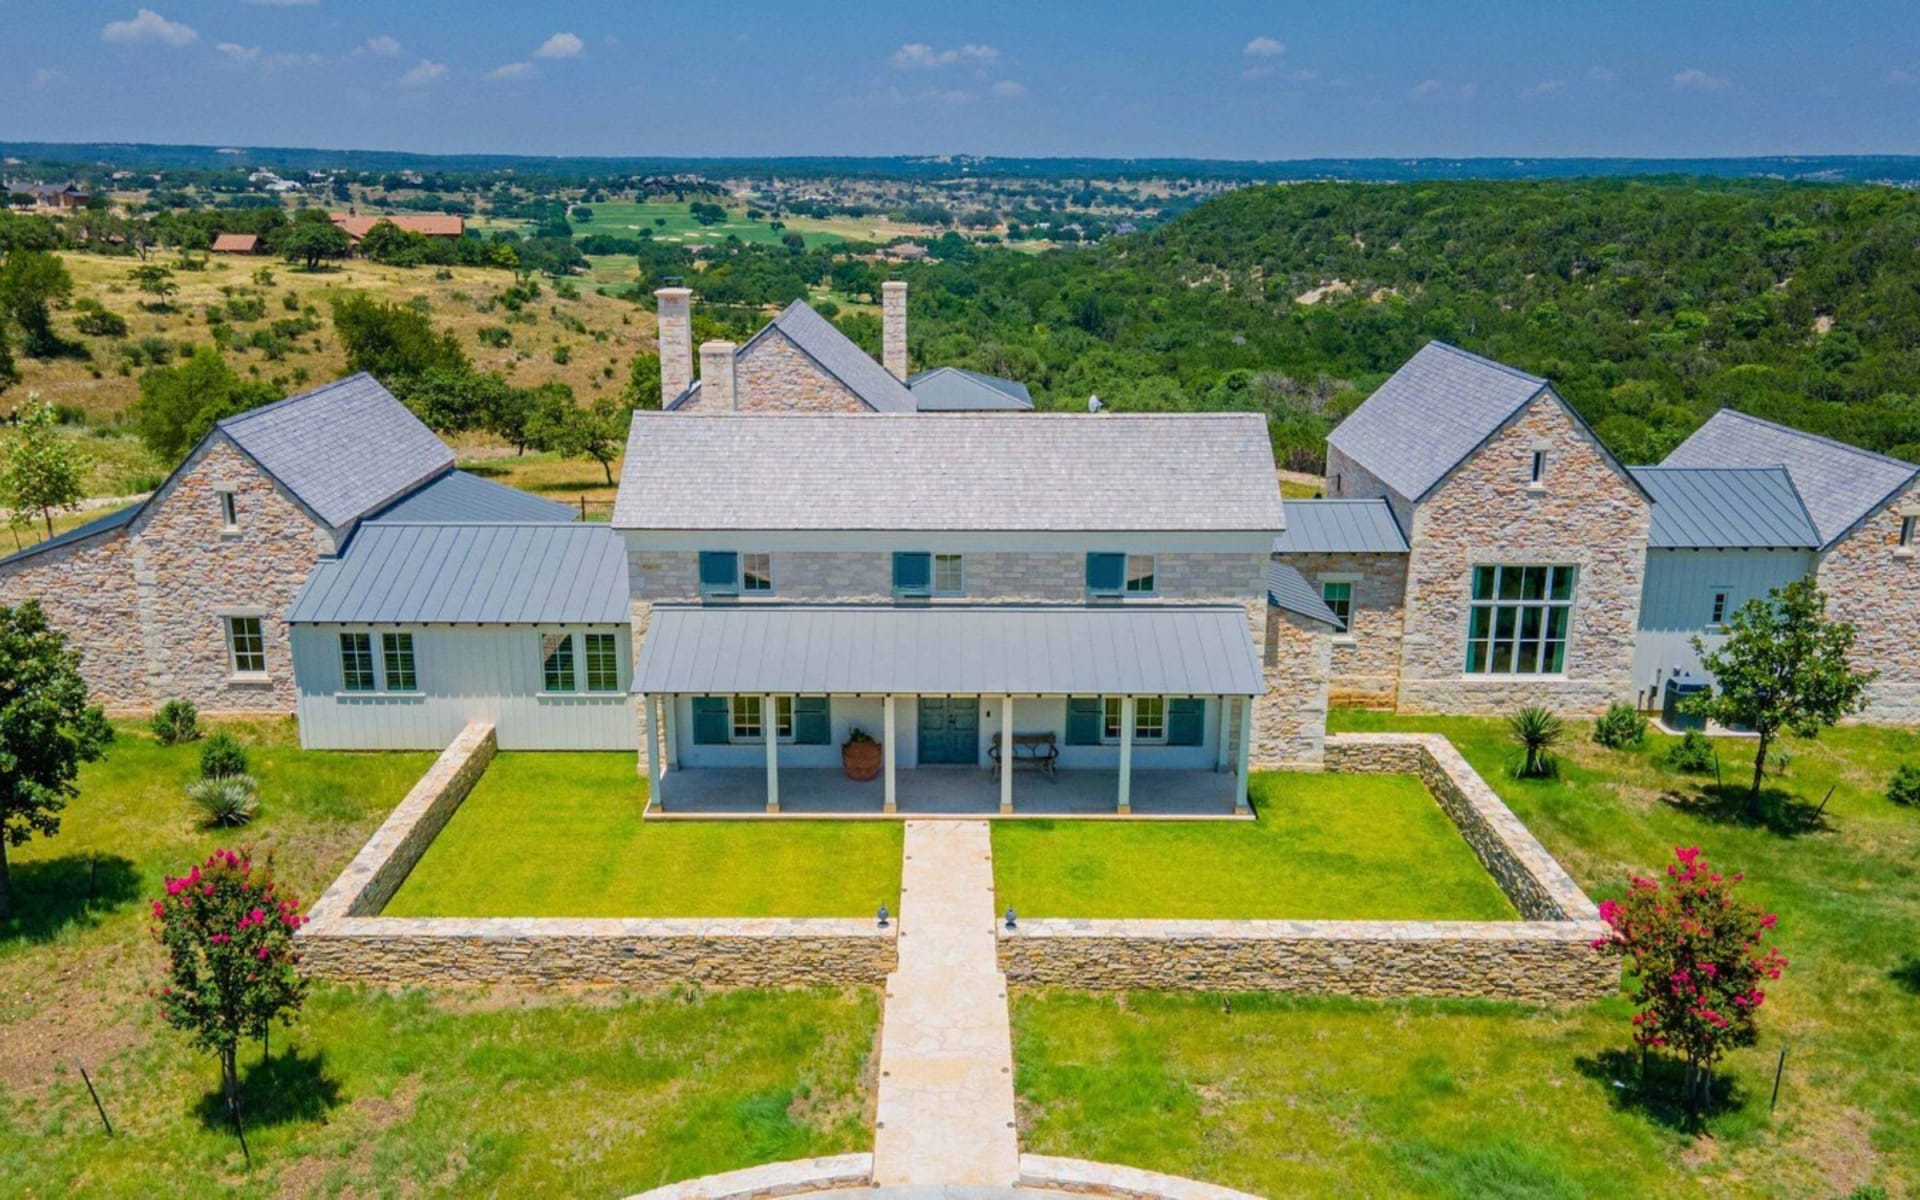 Texas Ranch Real Estate Company